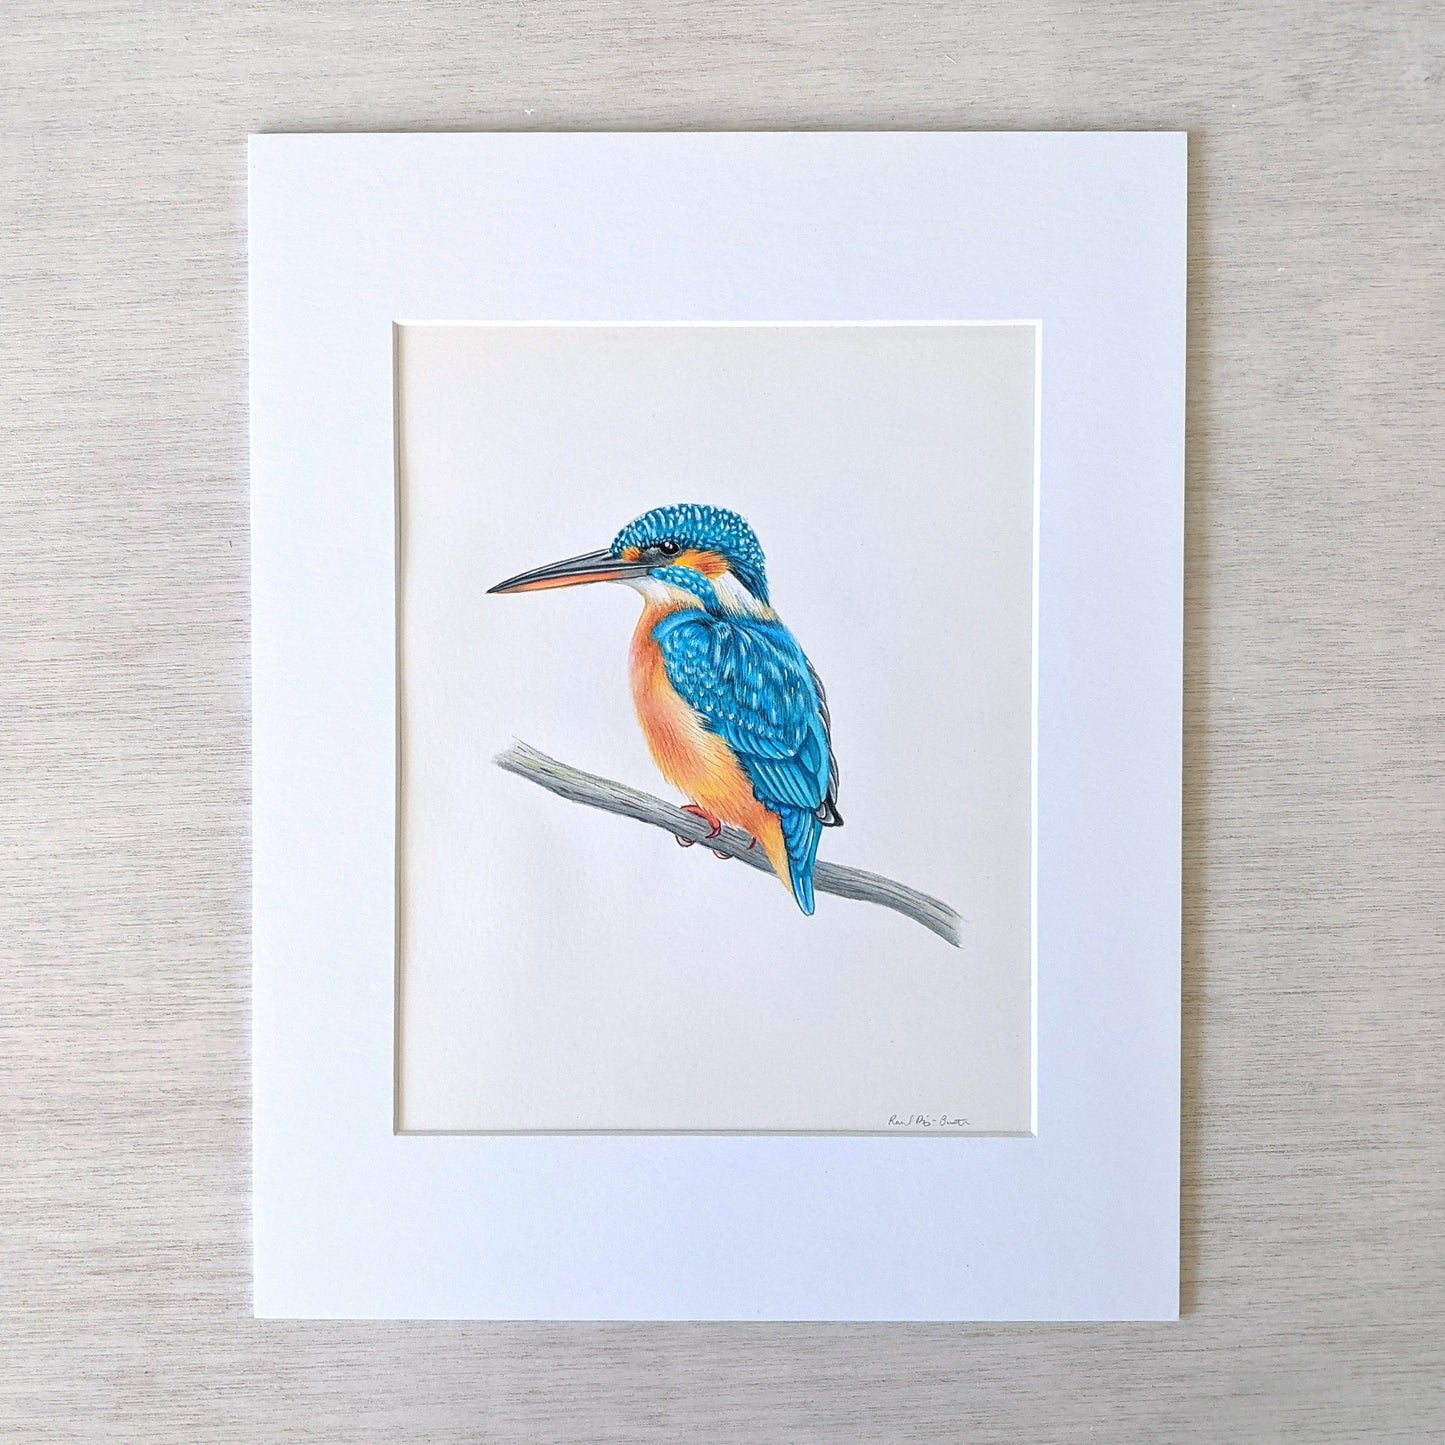 Original hand drawn pencil art of common kingfisher bird by Rachel Diaz-Bastin. Original artwork available. 